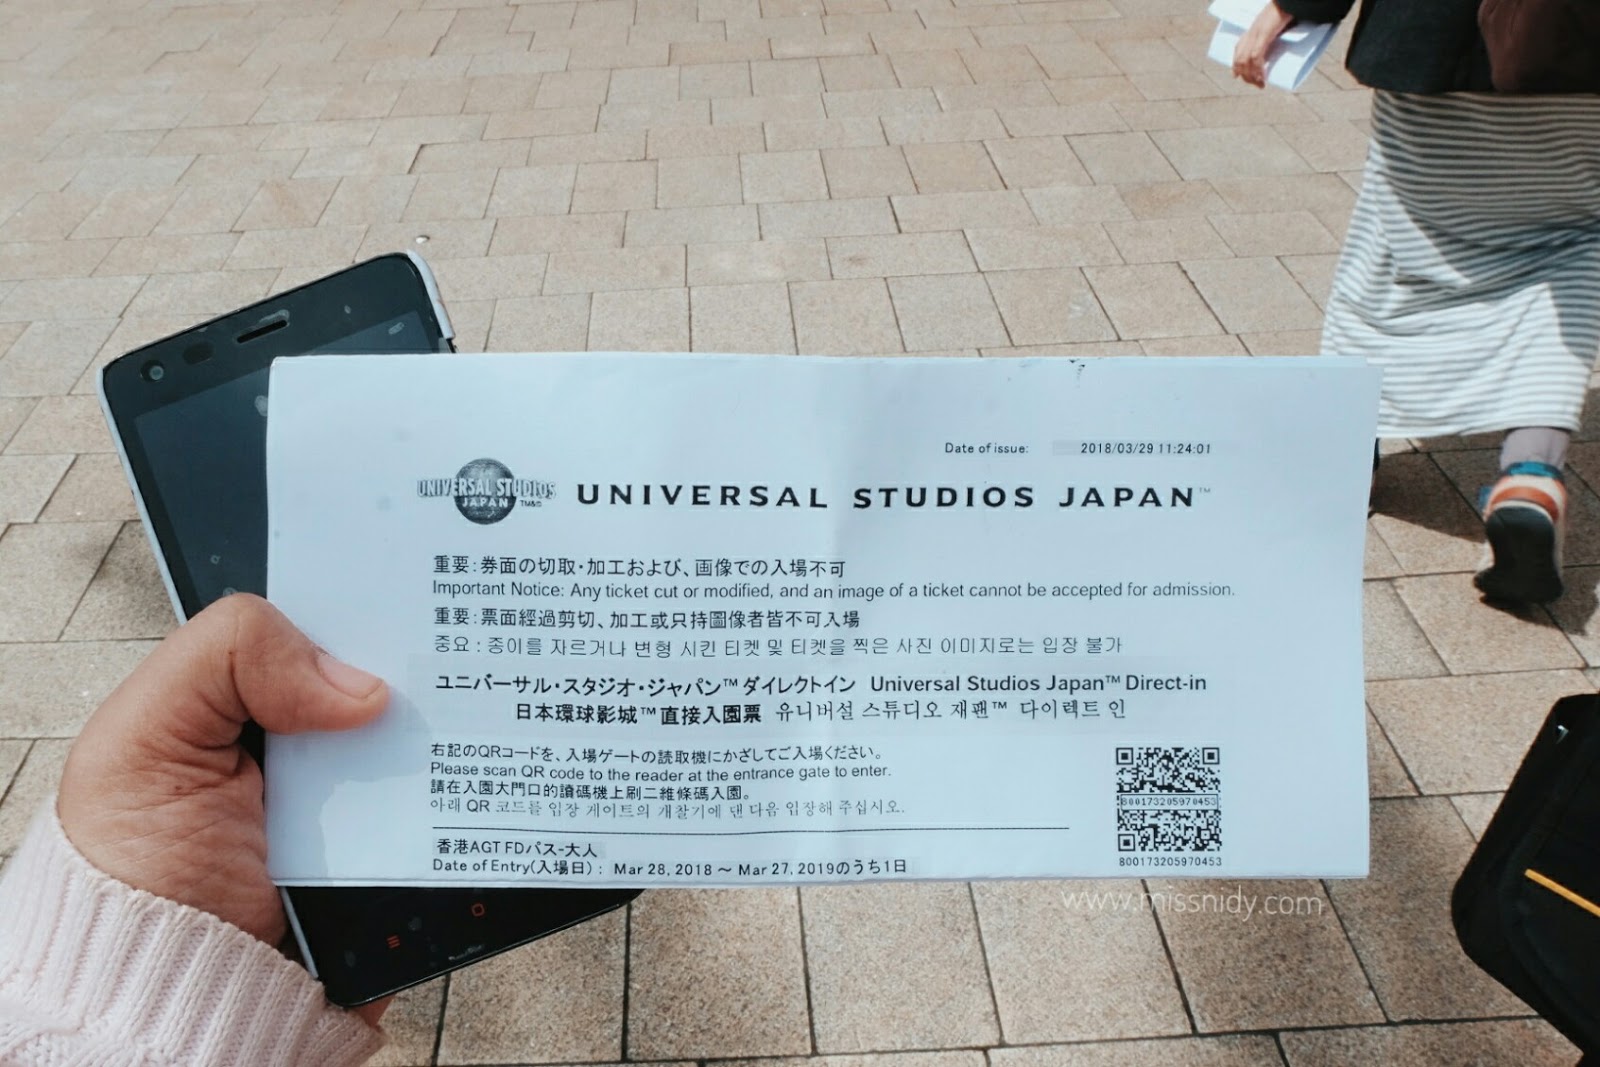 UNIVERSAL STUDIO JAPAN TICKET PRICE